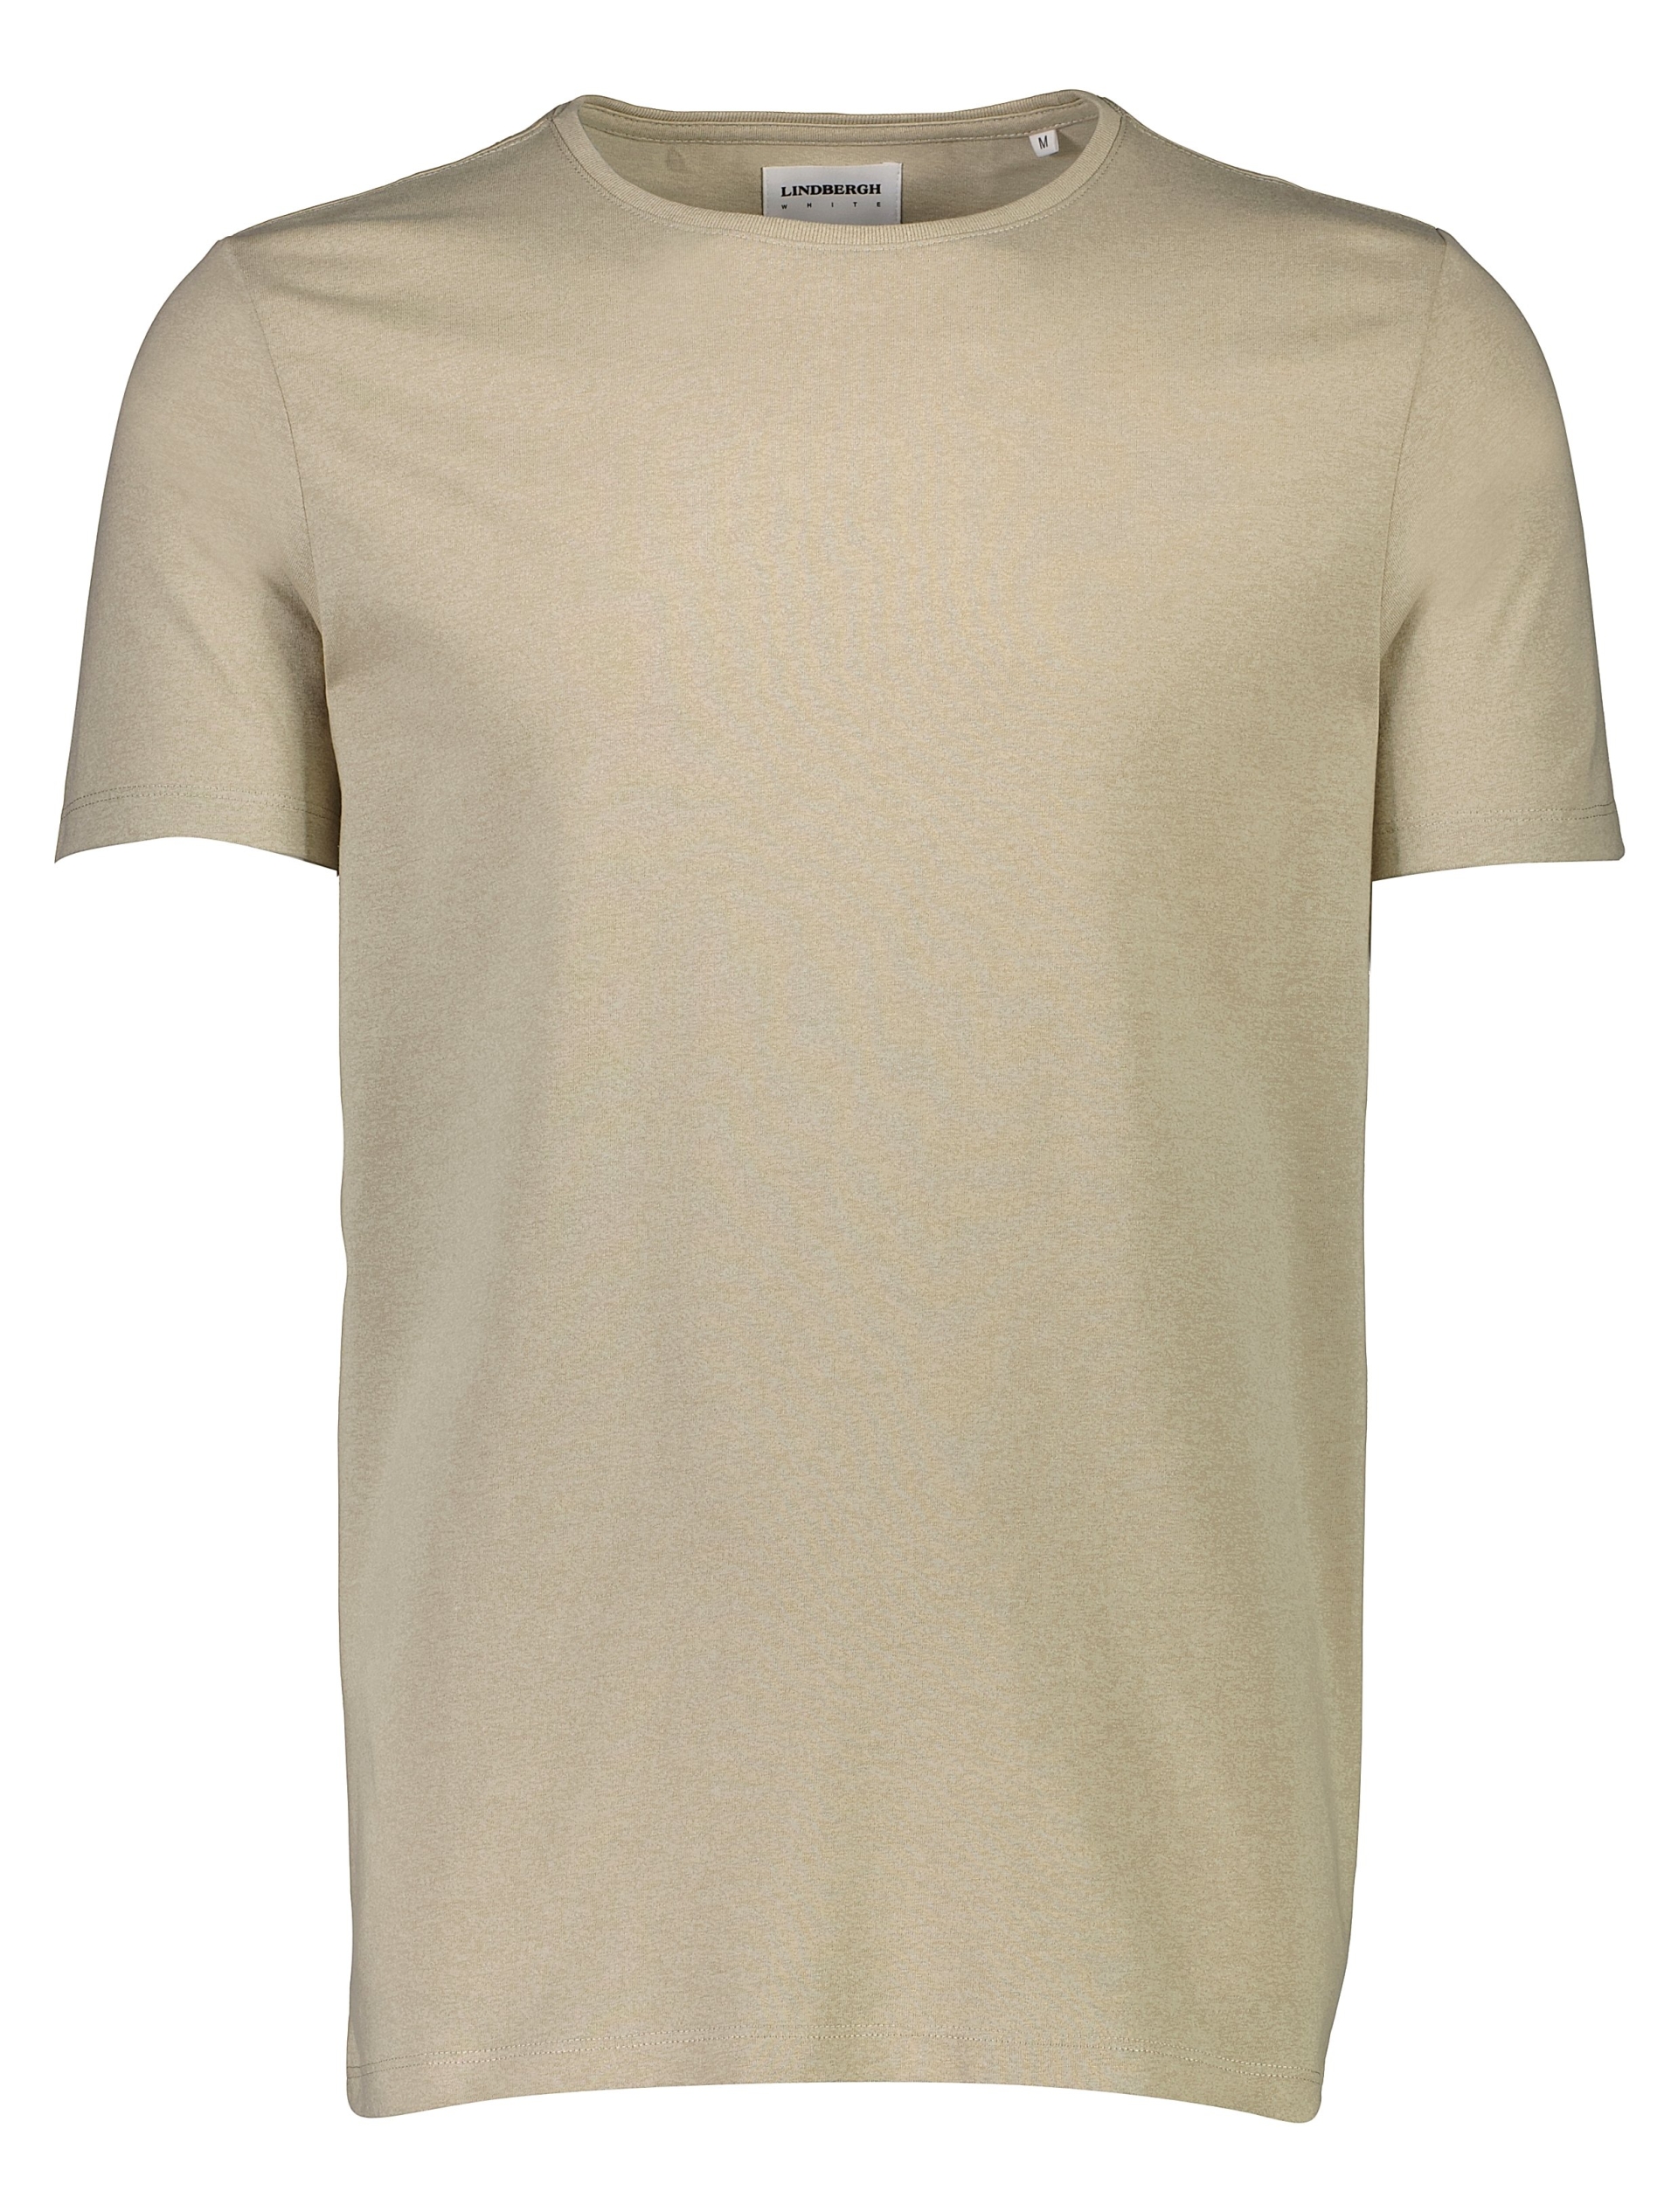 Lindbergh T-shirt bruin / stone mix 224